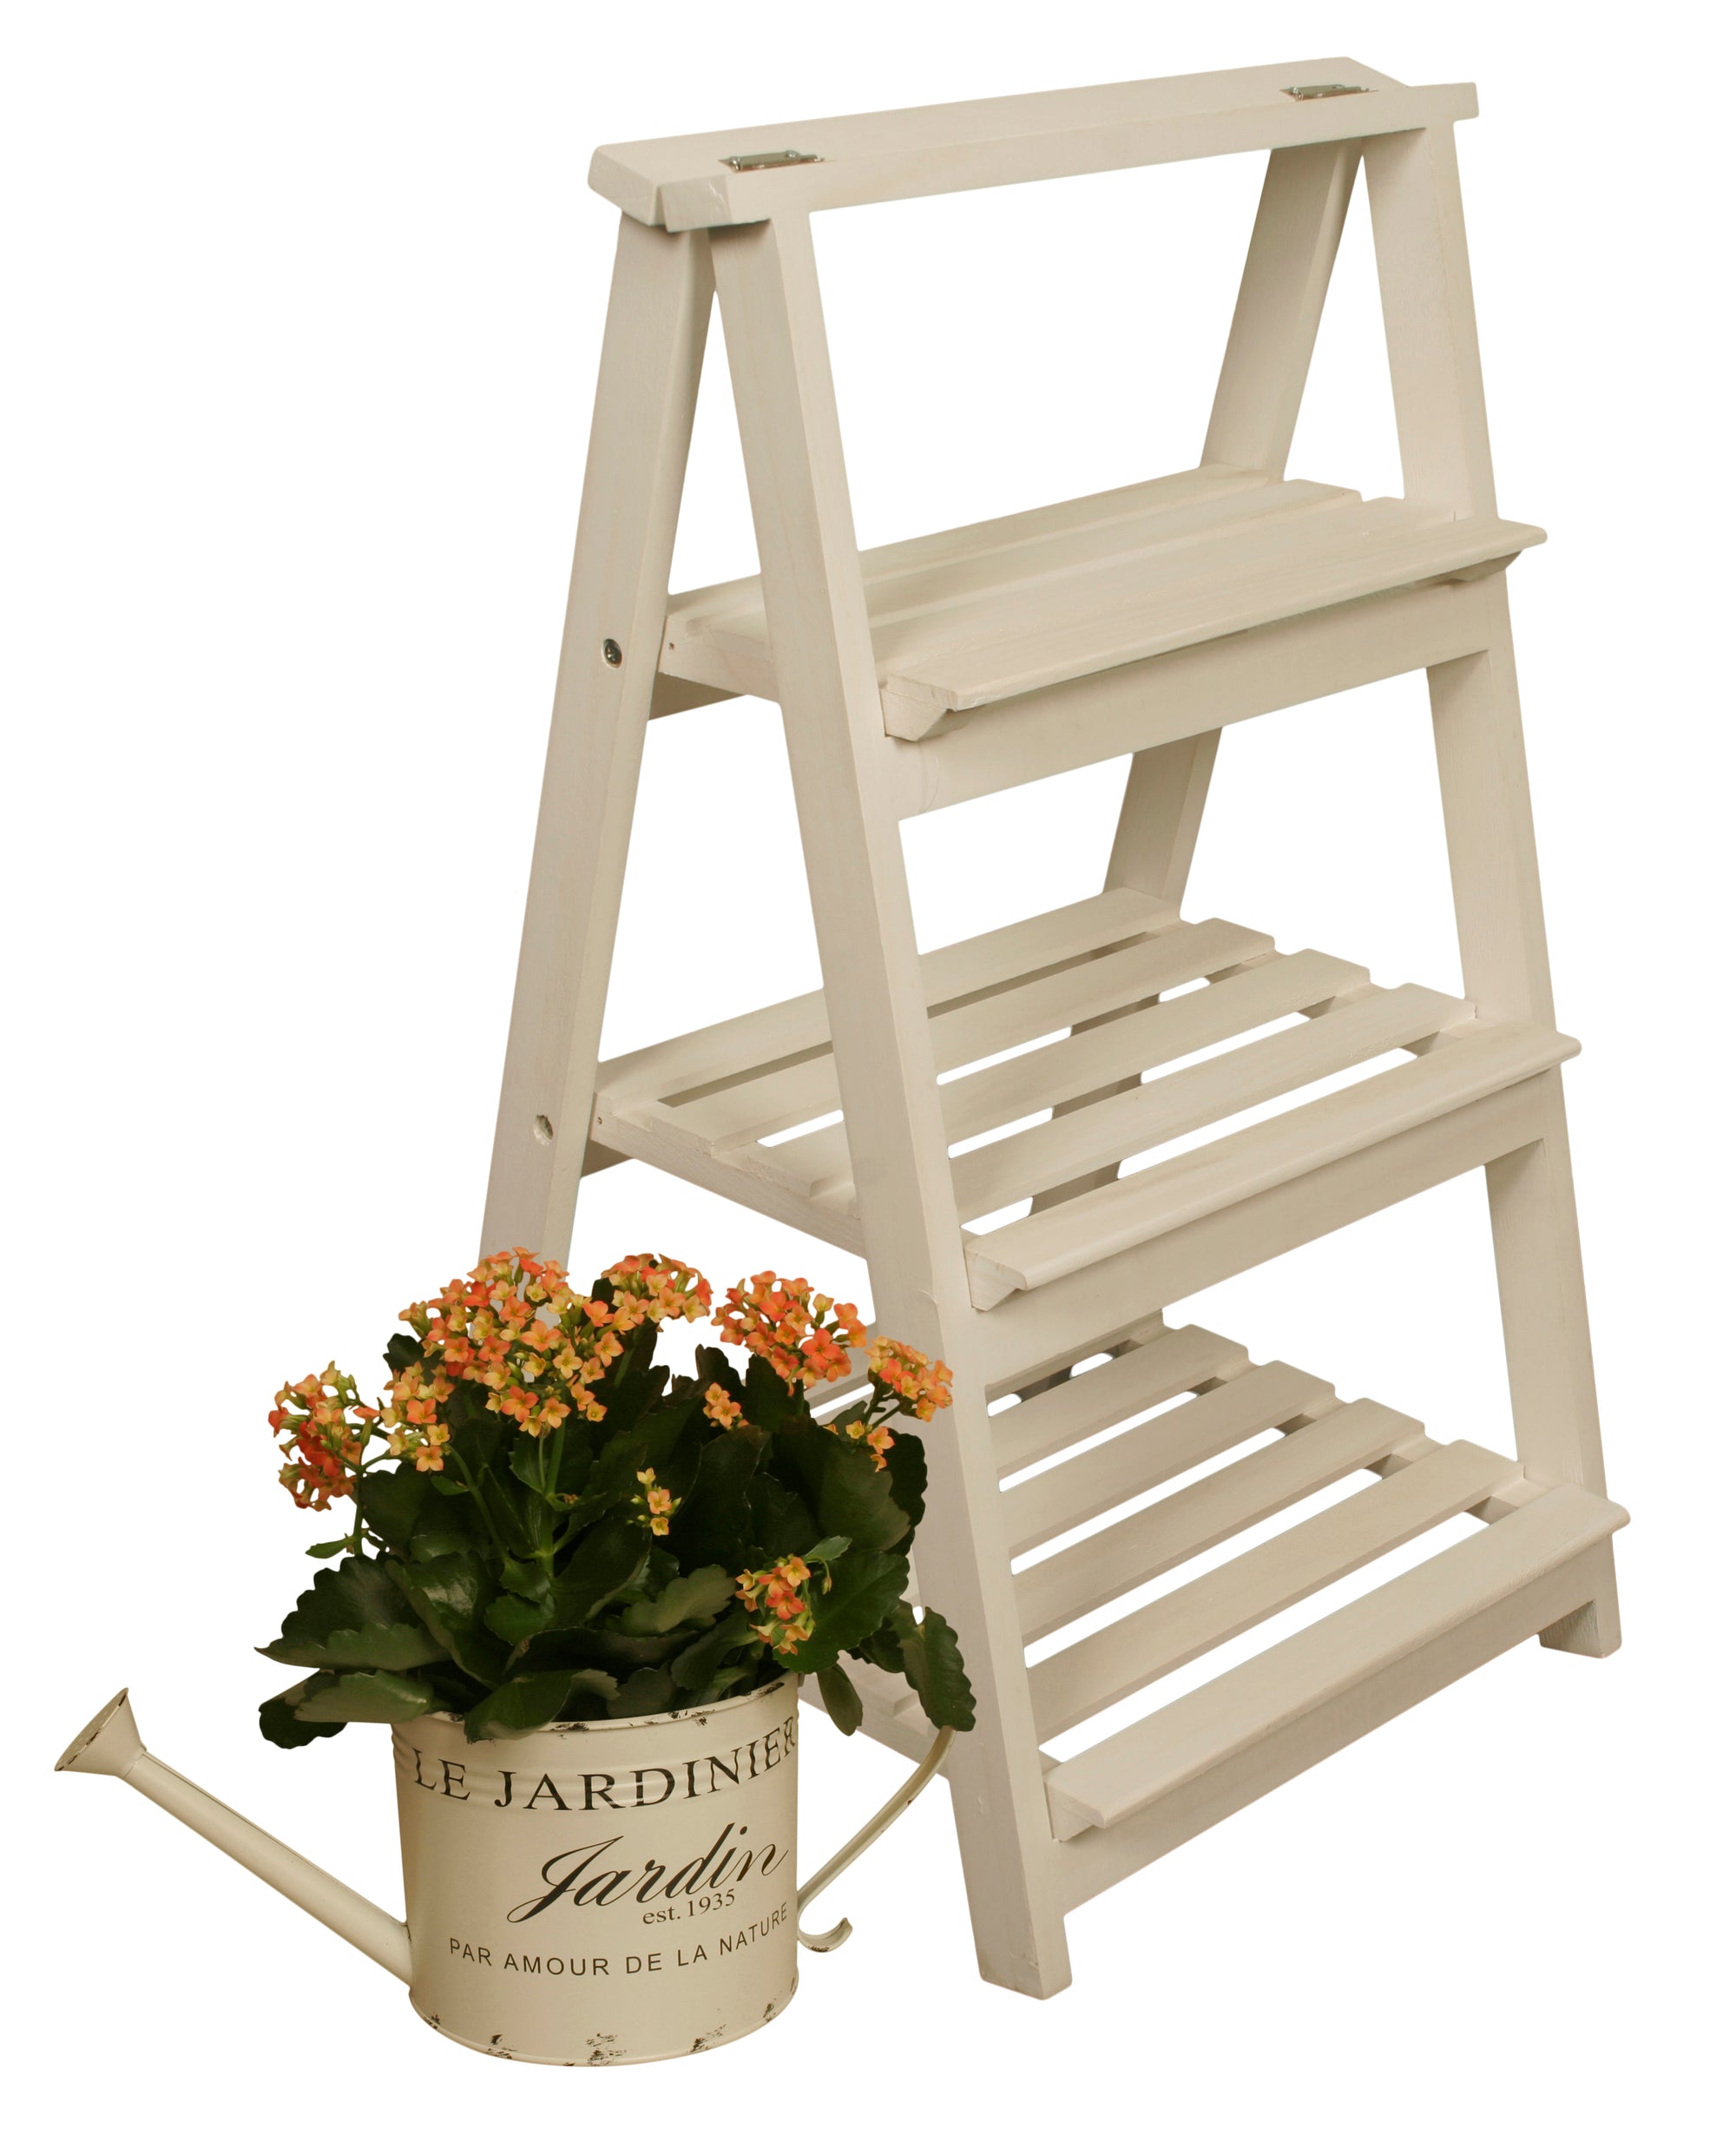 Display 3 Tiered Garden Ladder-Wald Imports